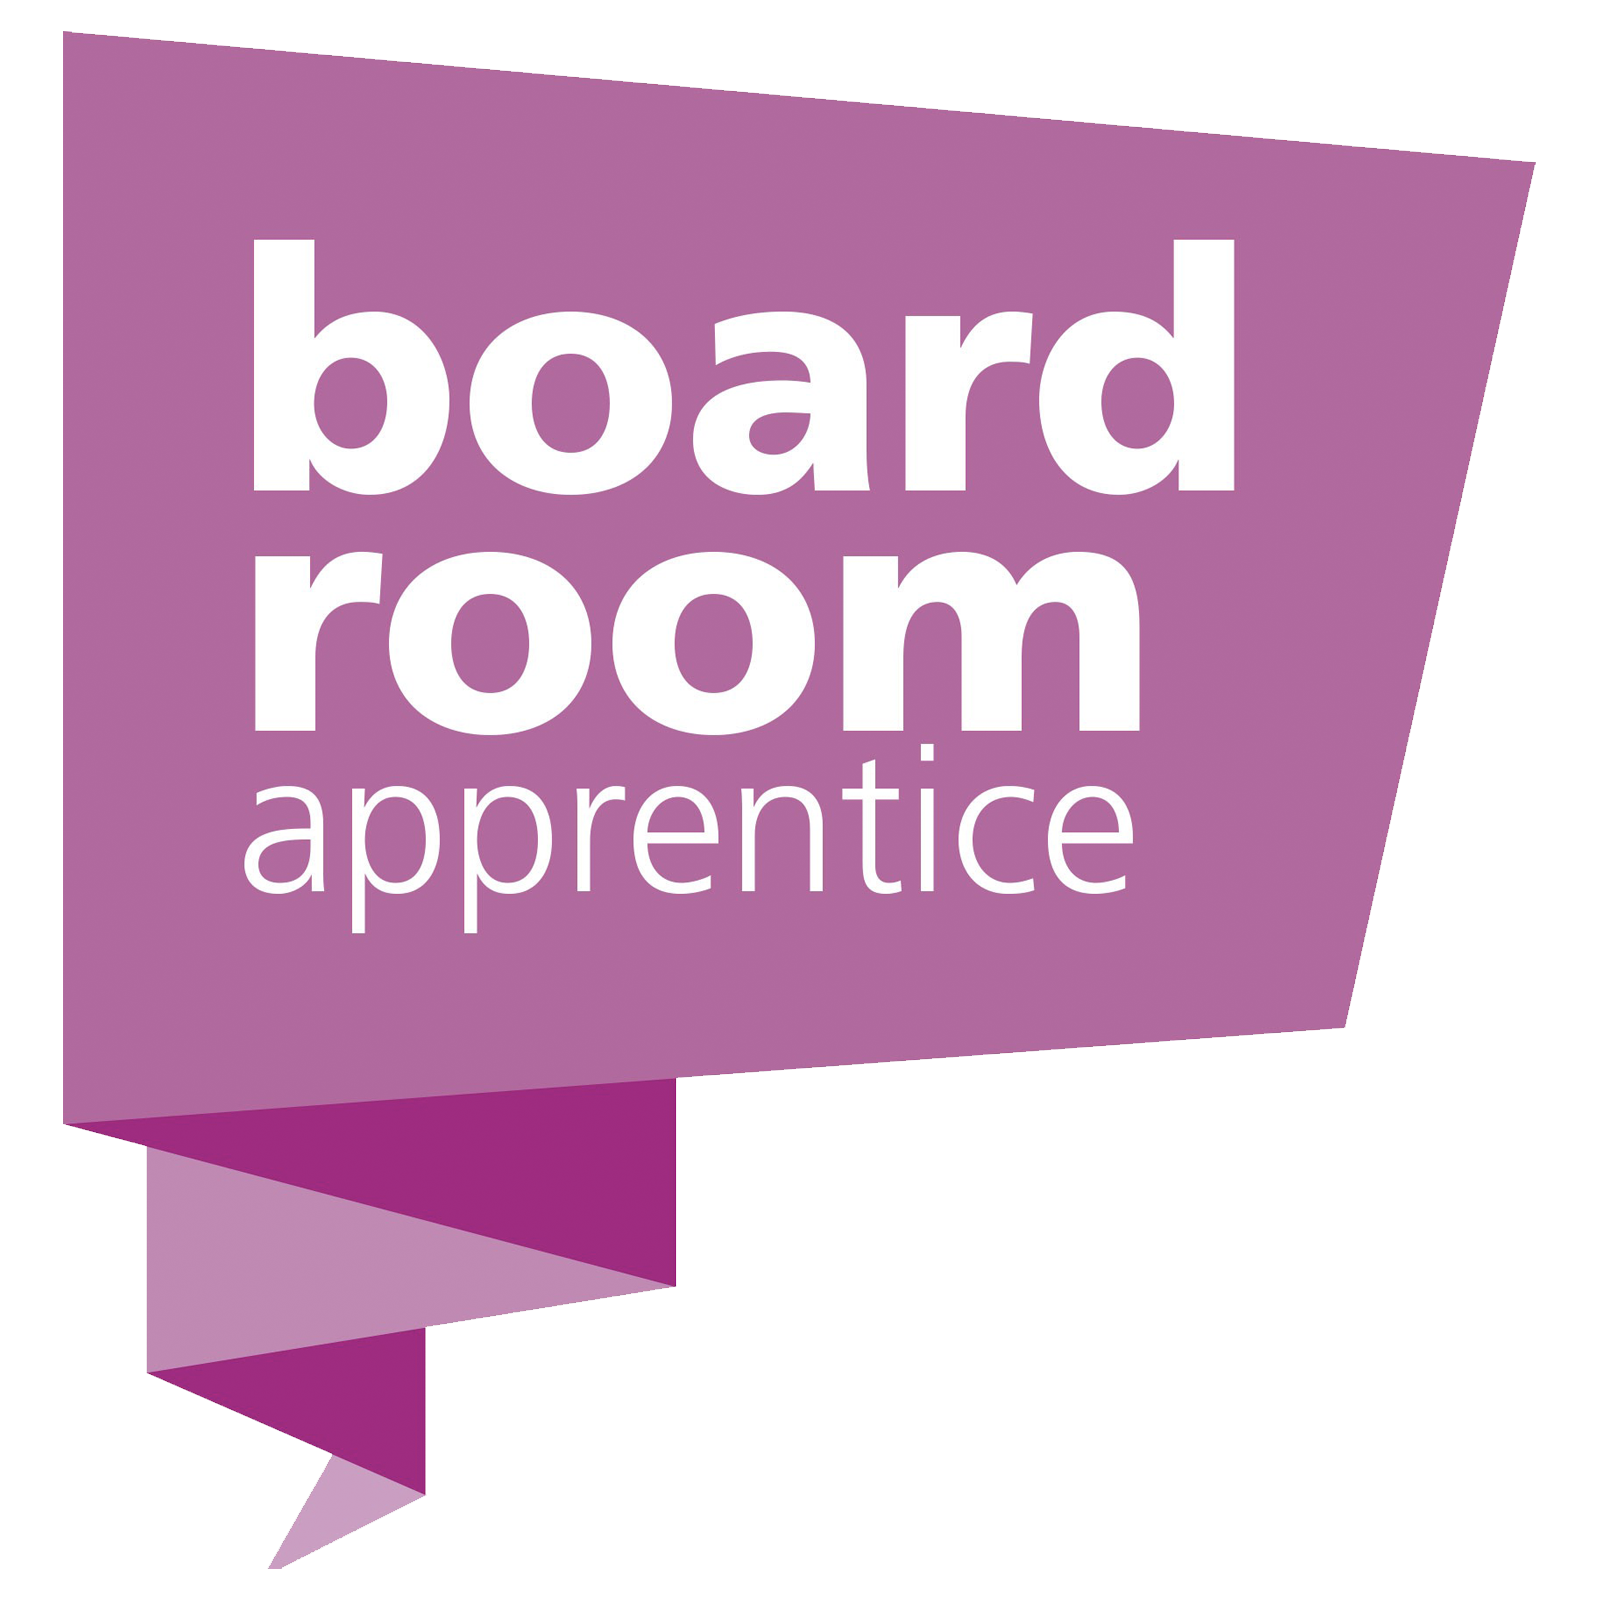 Boardroom Apprentice logo png